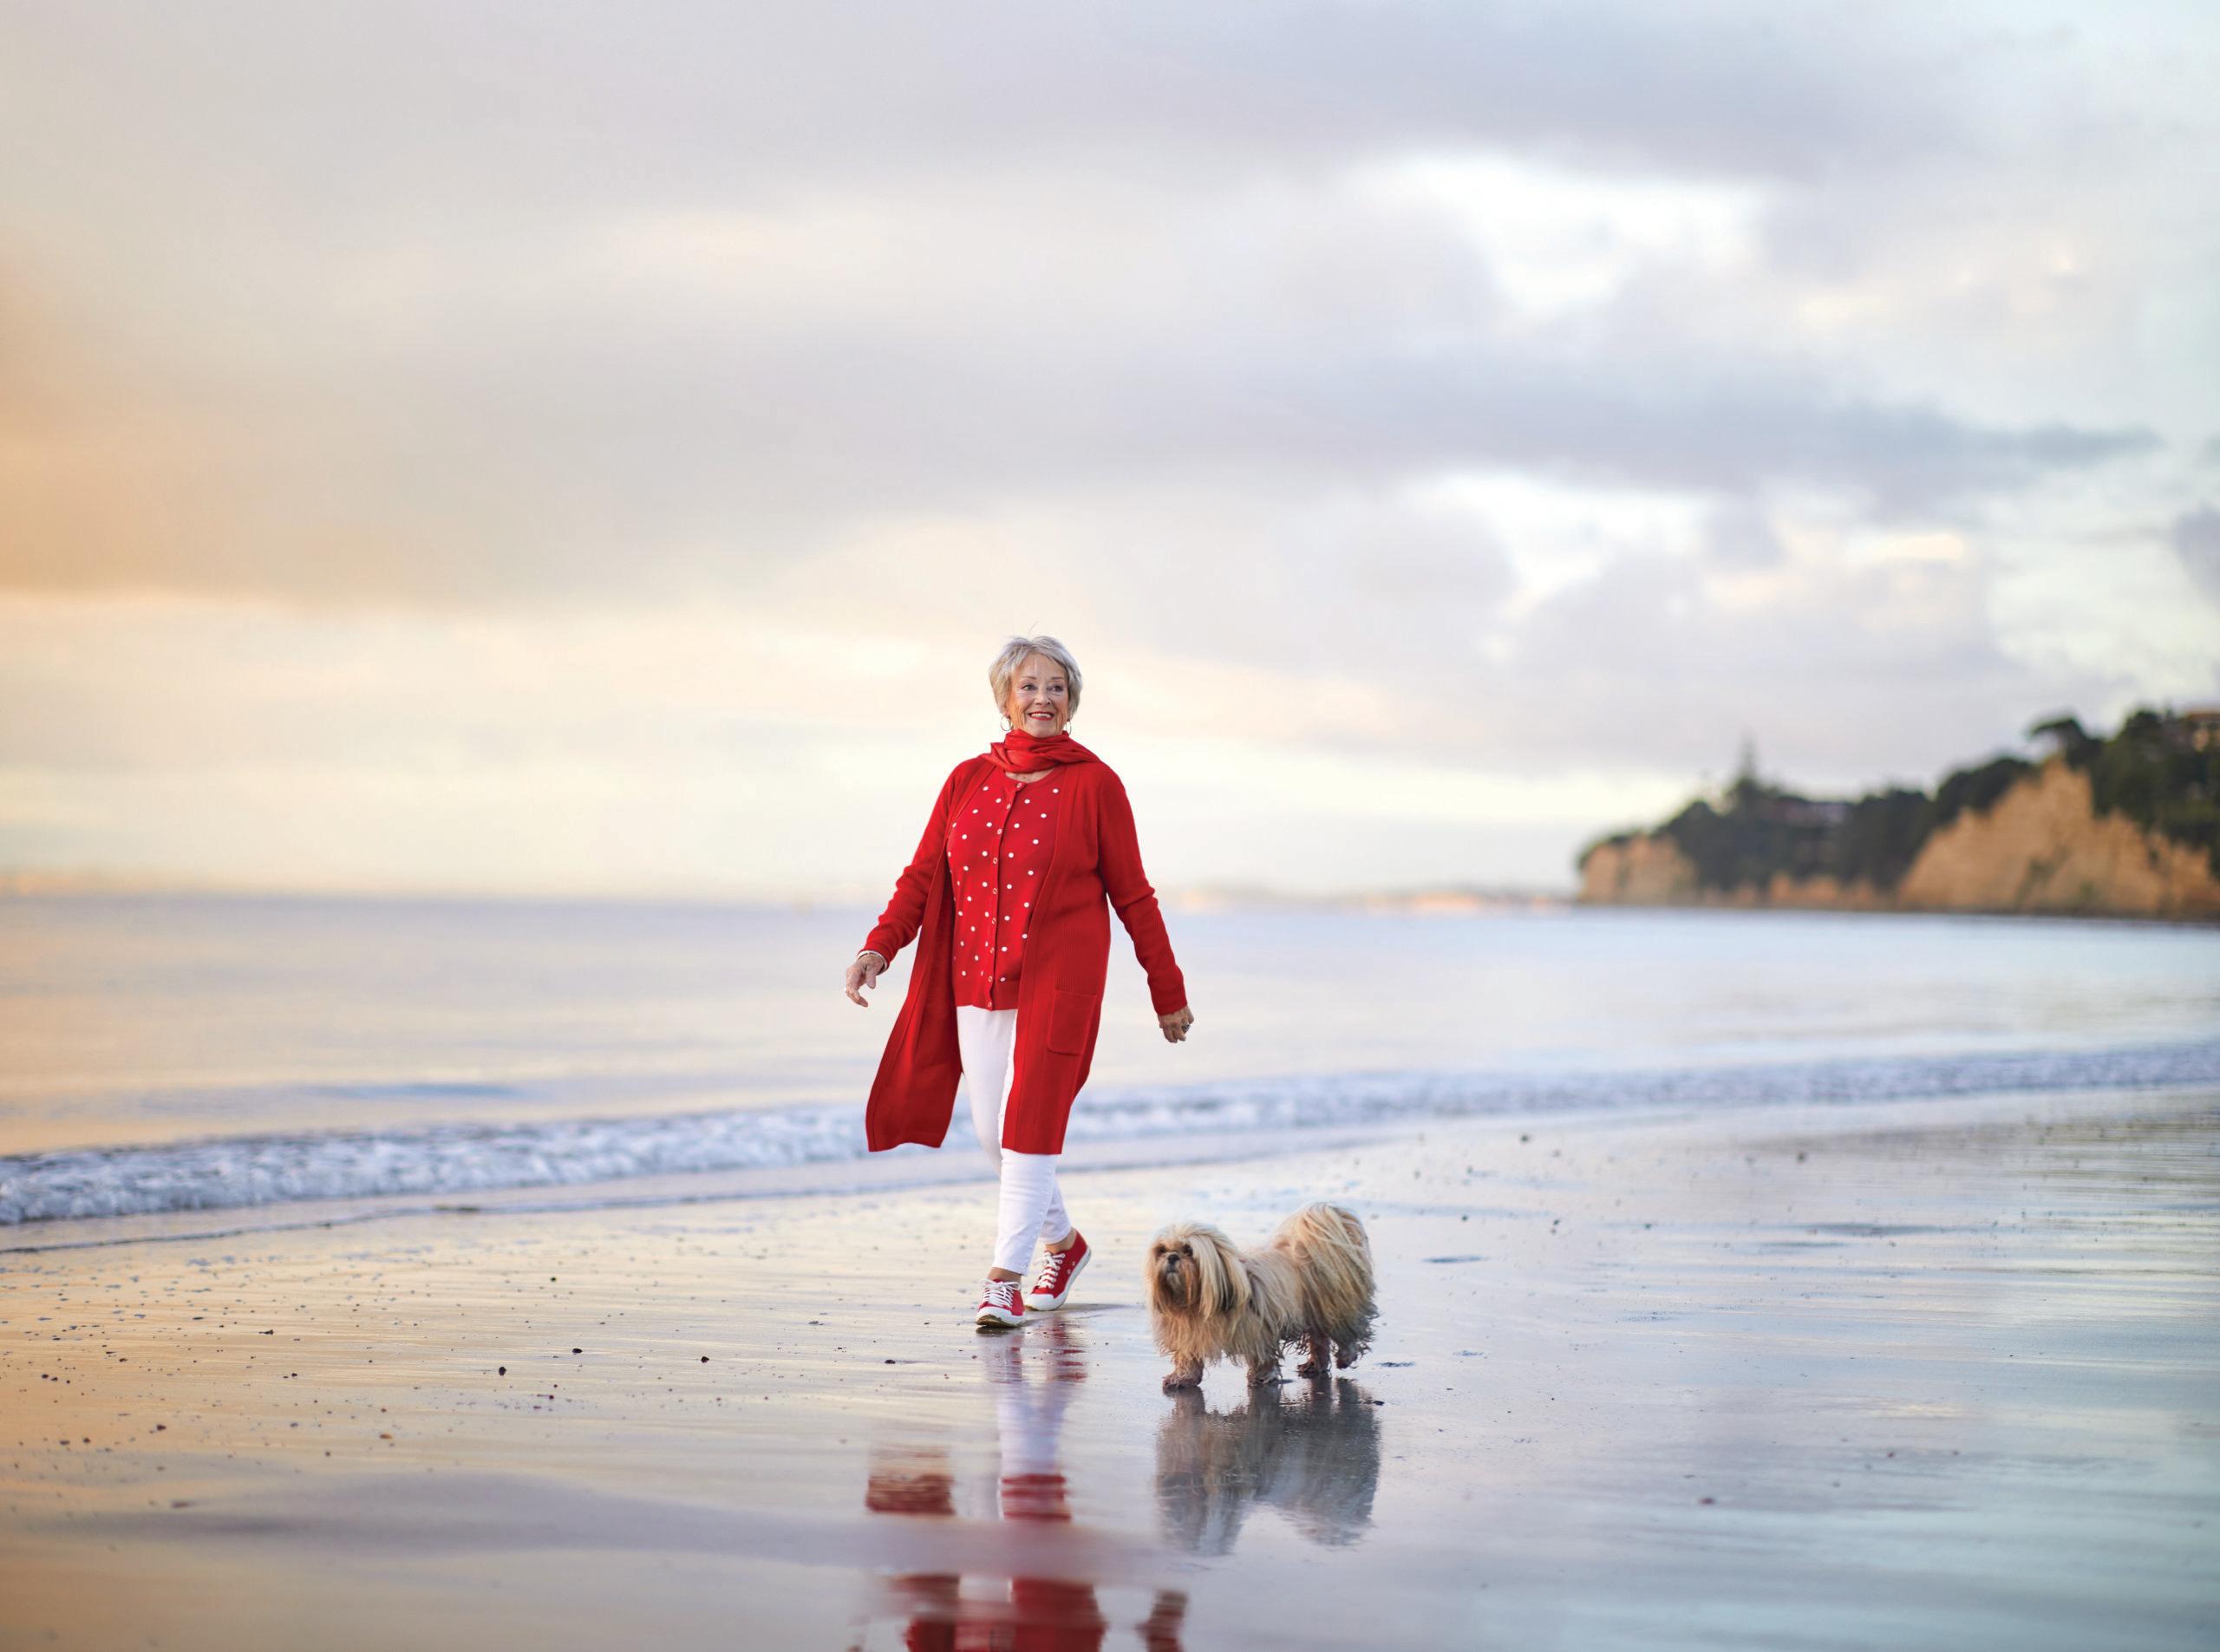 Oceania Residents enjoys a walk on the beach with her dog